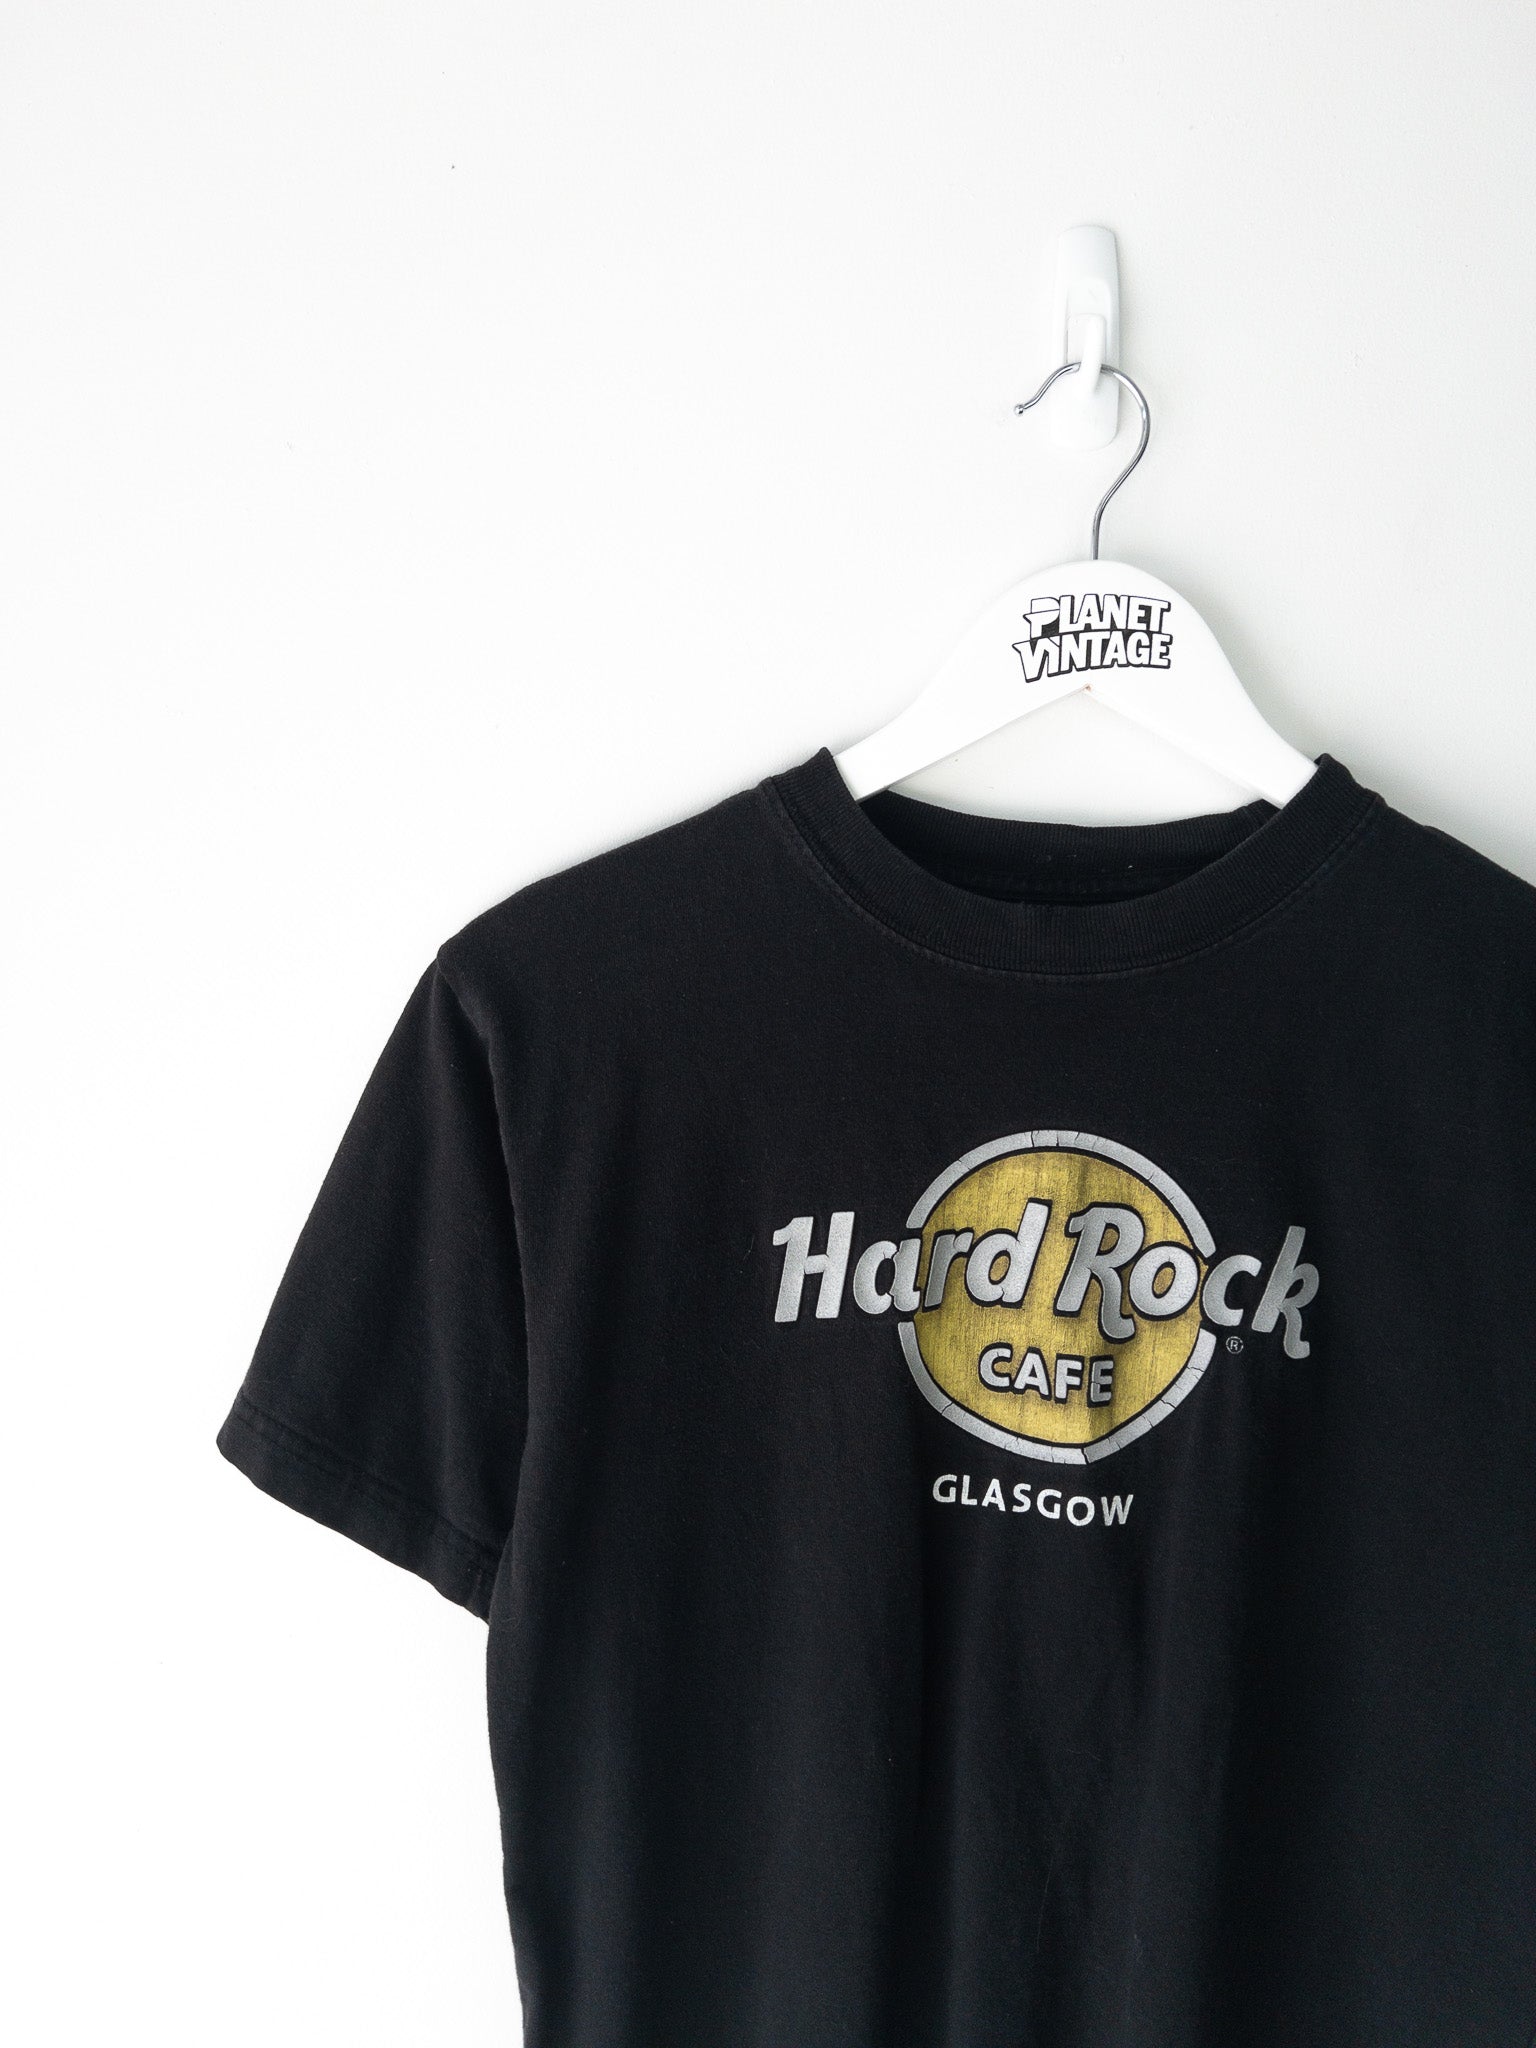 Vintage Hard Rock Cafe Glasgow Tee (XS)